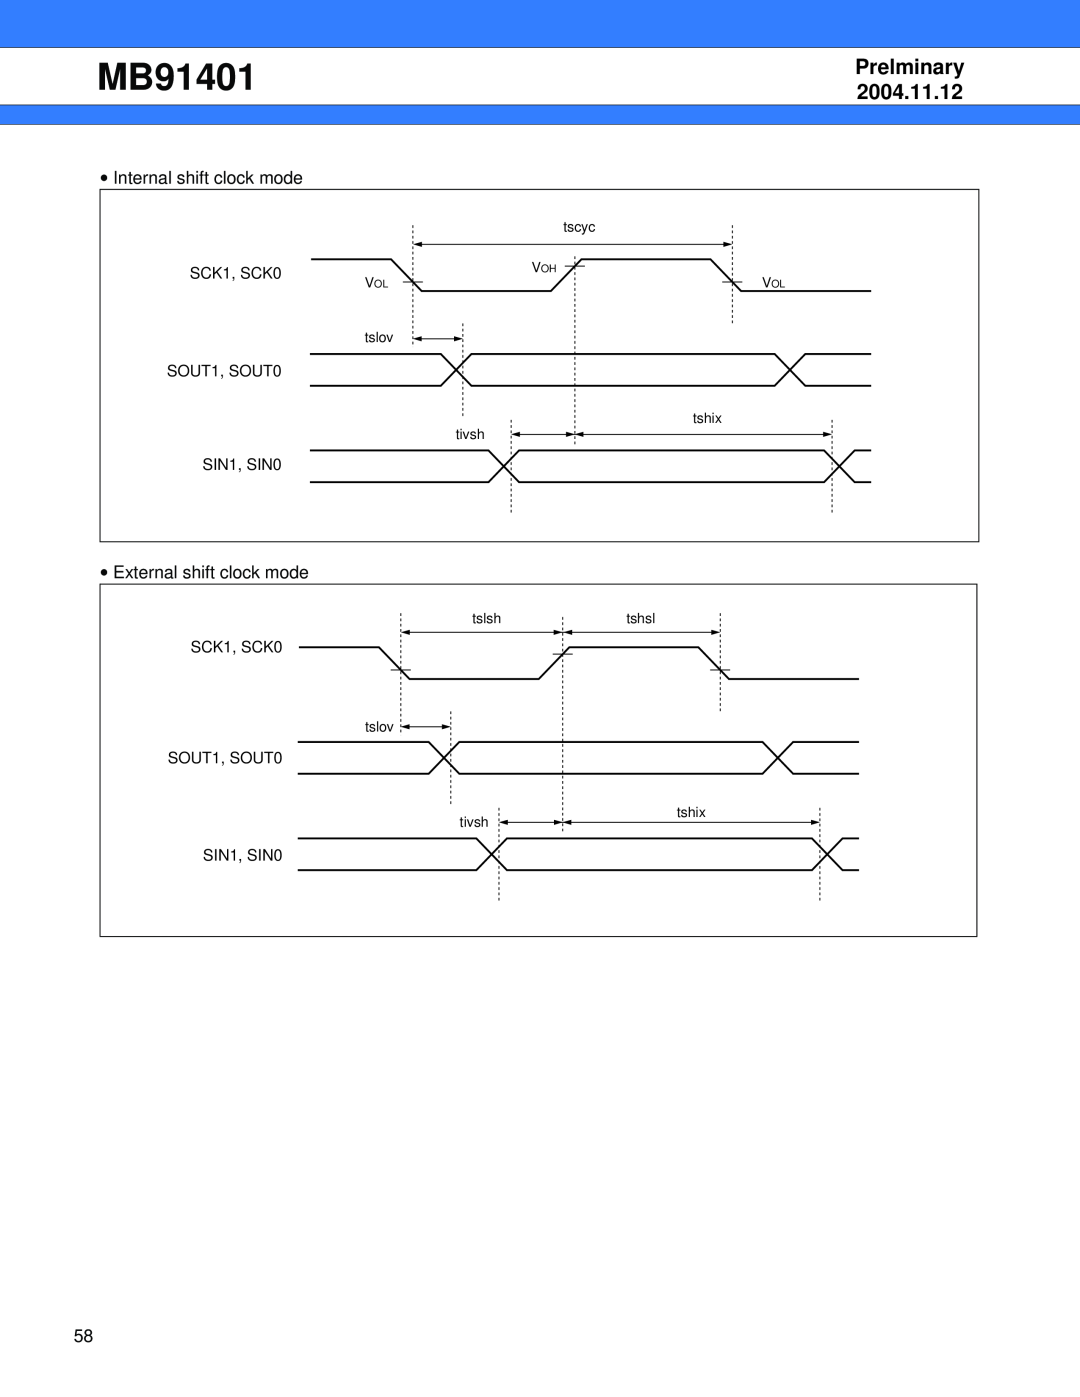 Fujitsu MB91401 manual Prelminary, 2004.11.12, SCK1, SCK0, SOUT1, SOUT0, SIN1, SIN0 